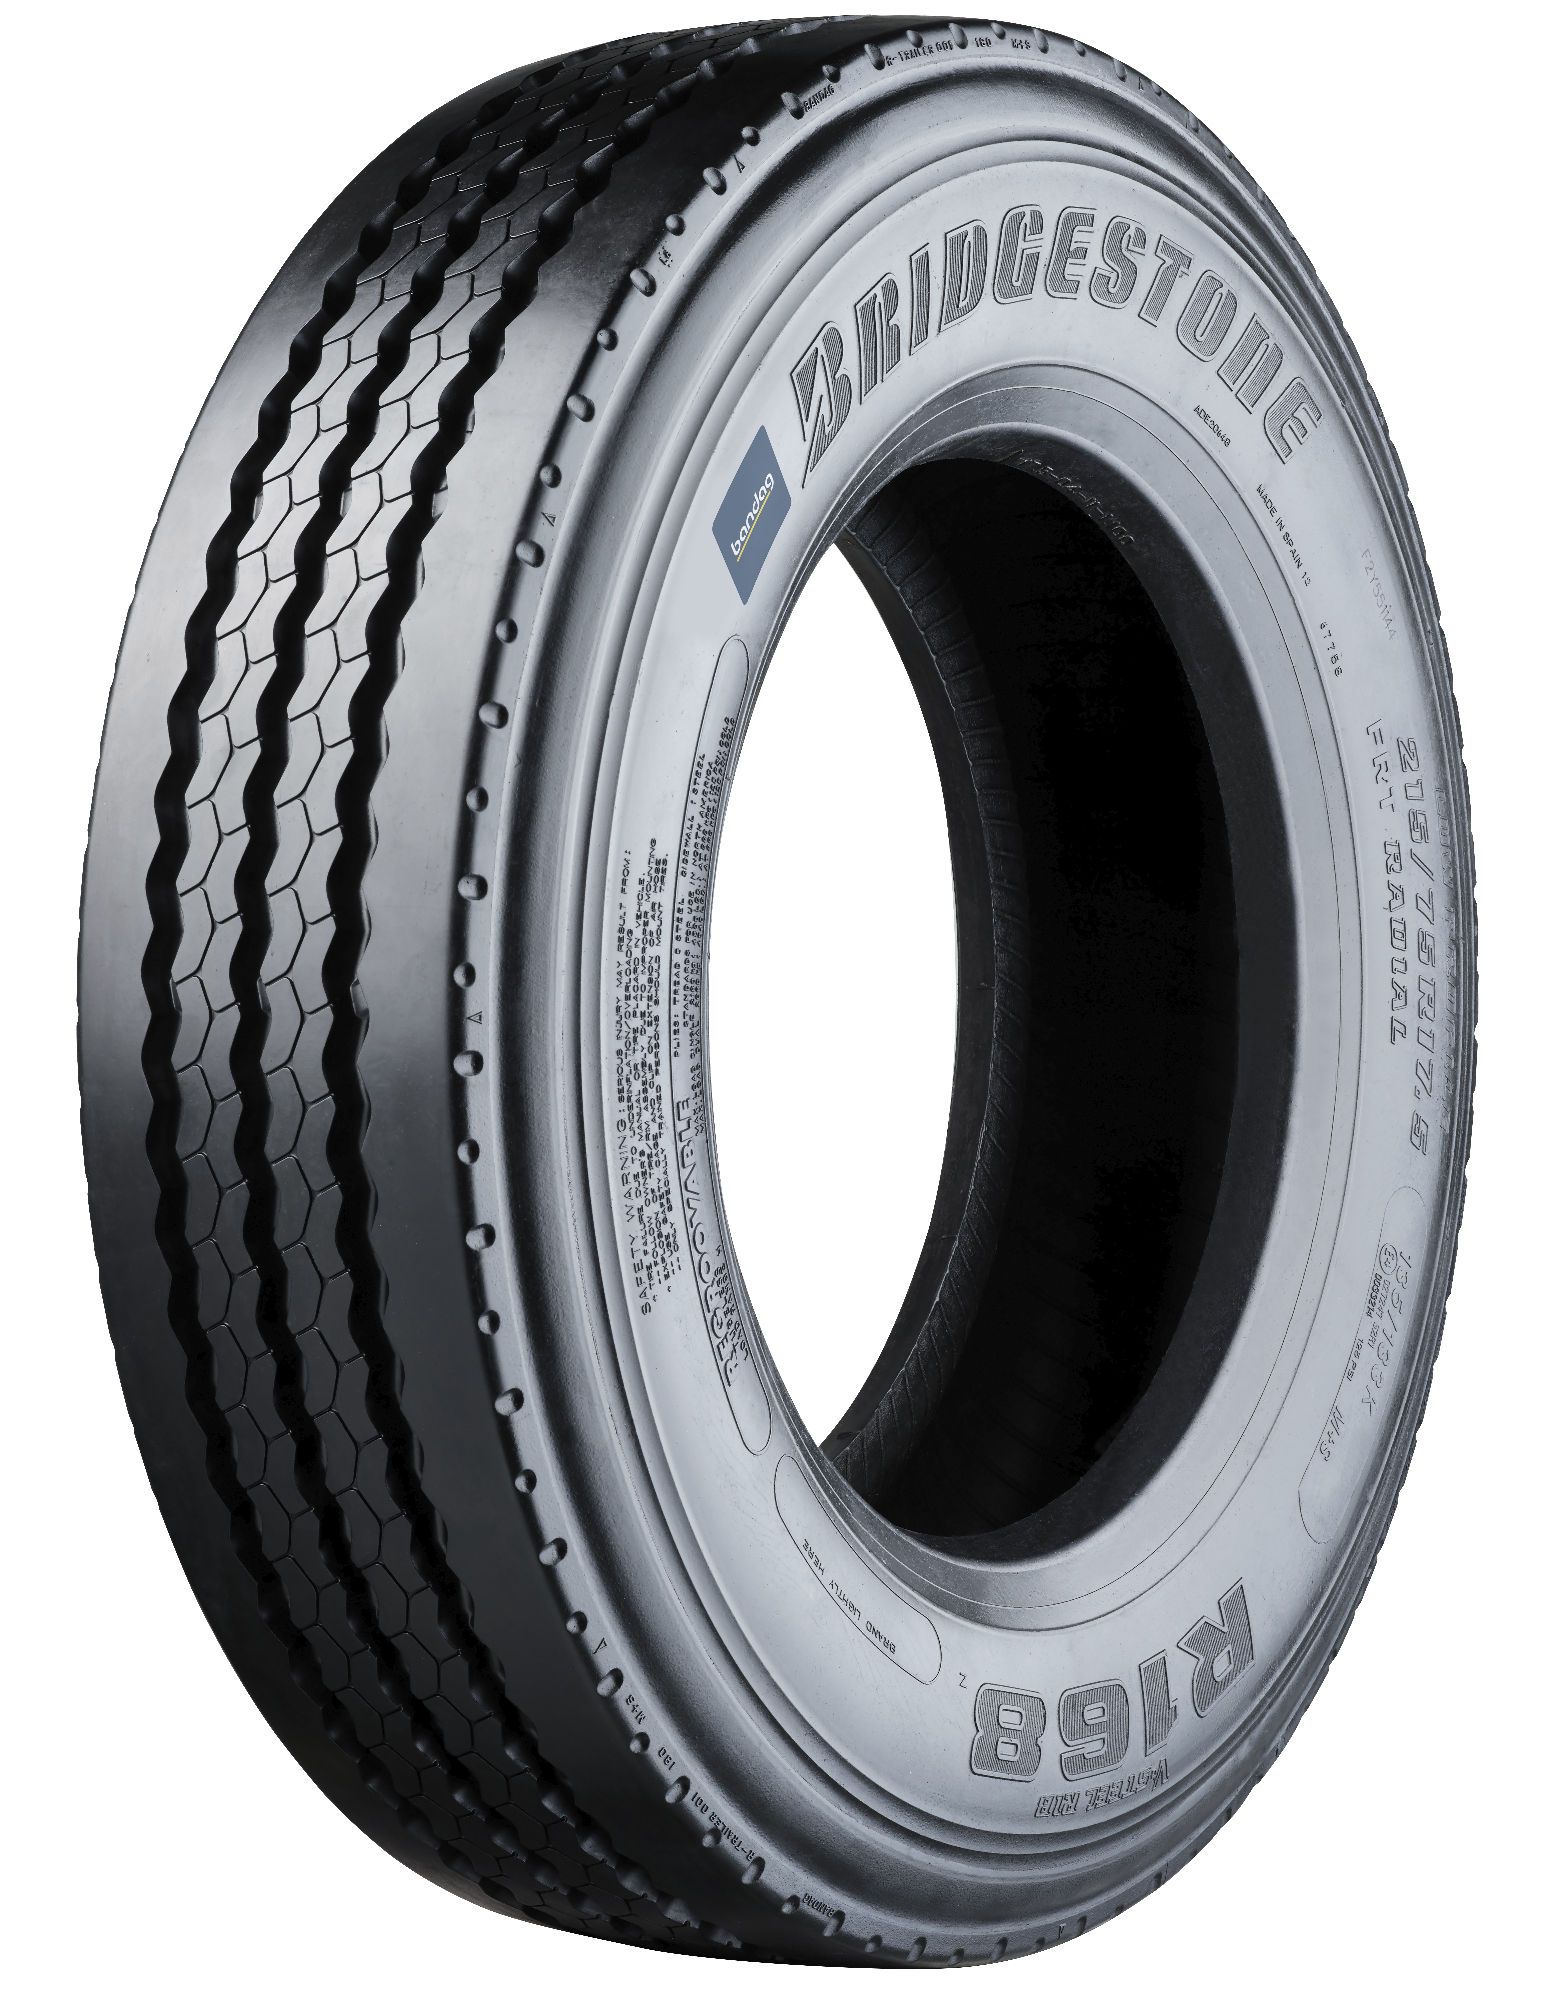 Gomme Nuove Bridgestone 245/70 R17.5 143/141J R-TRAILER 001 M+S (8.00mm) pneumatici nuovi Estivo